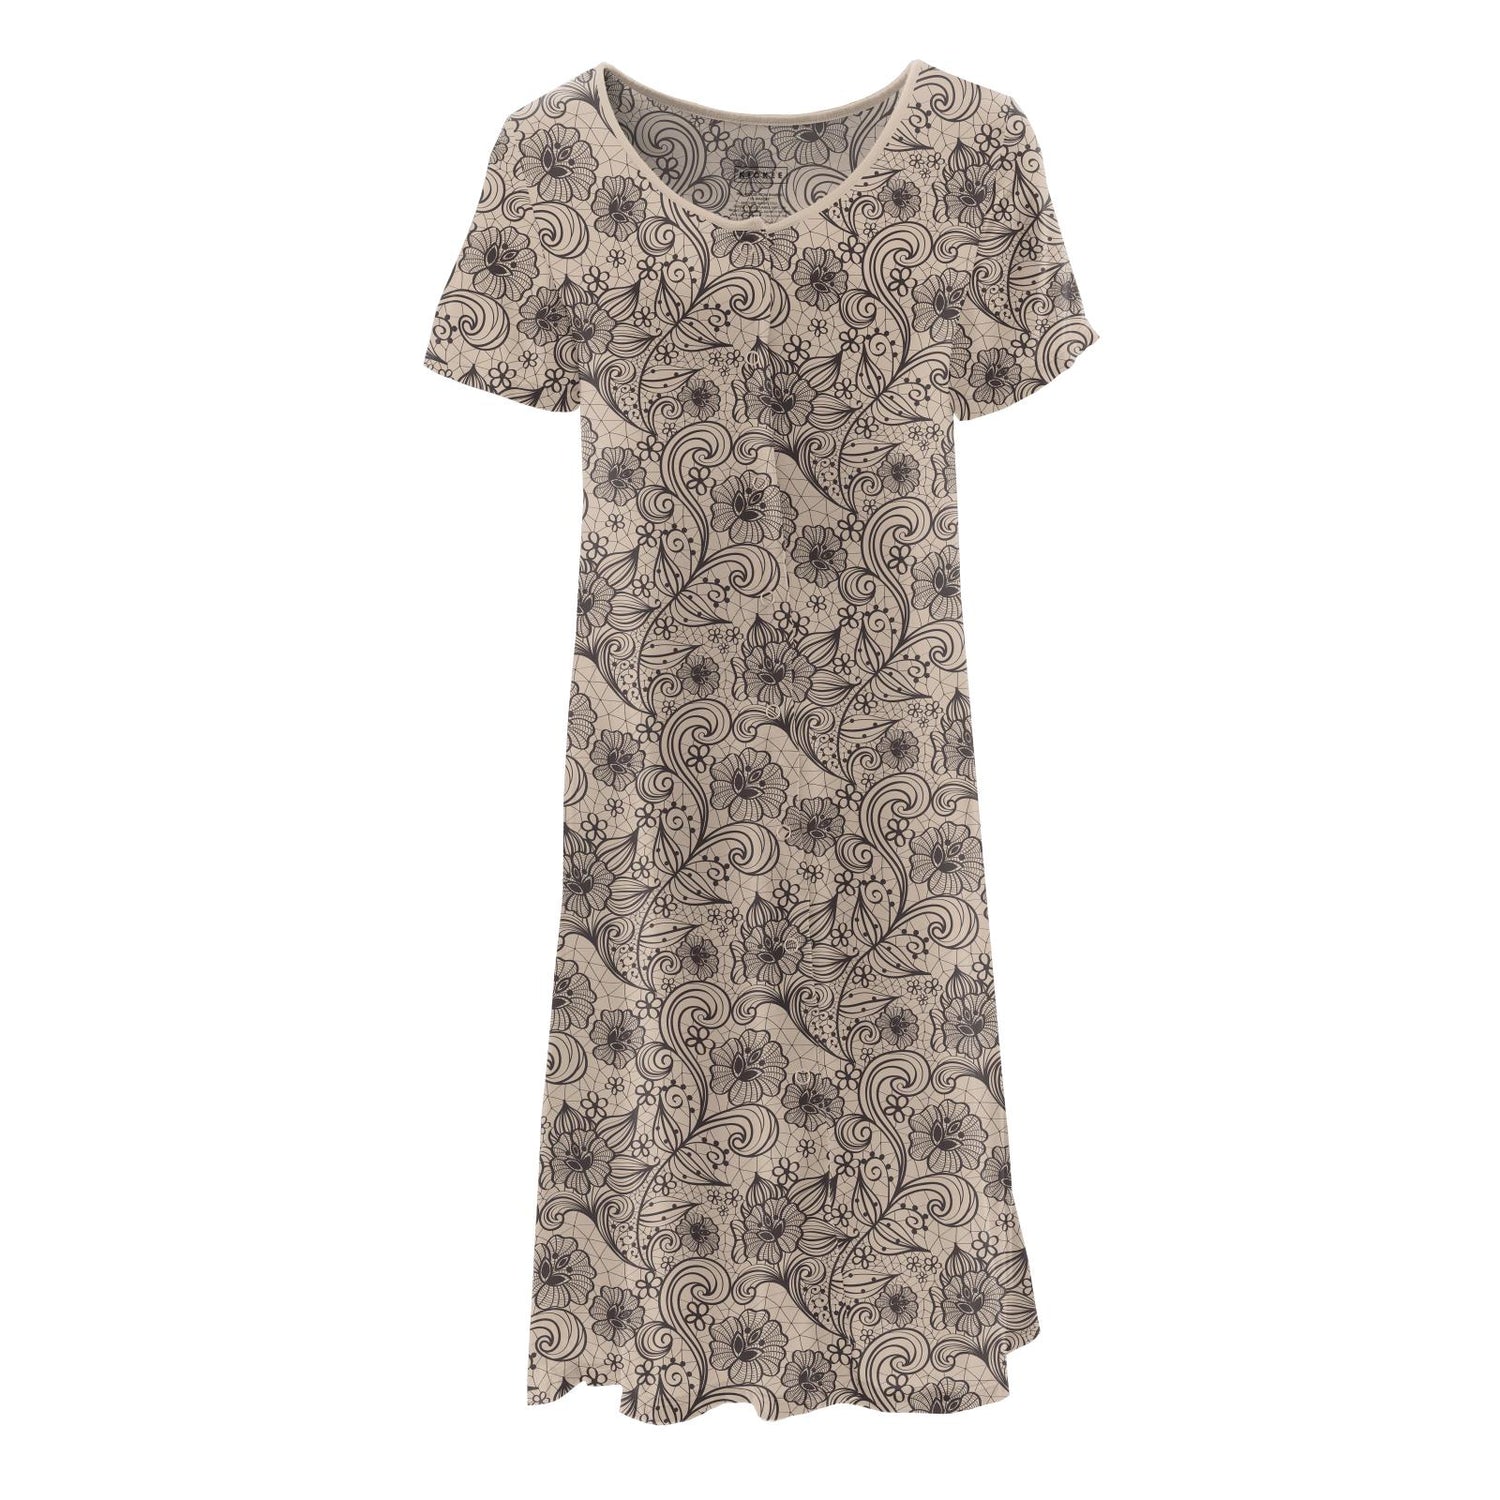 Women's Print Nursing Nightgown in Burlap Lace